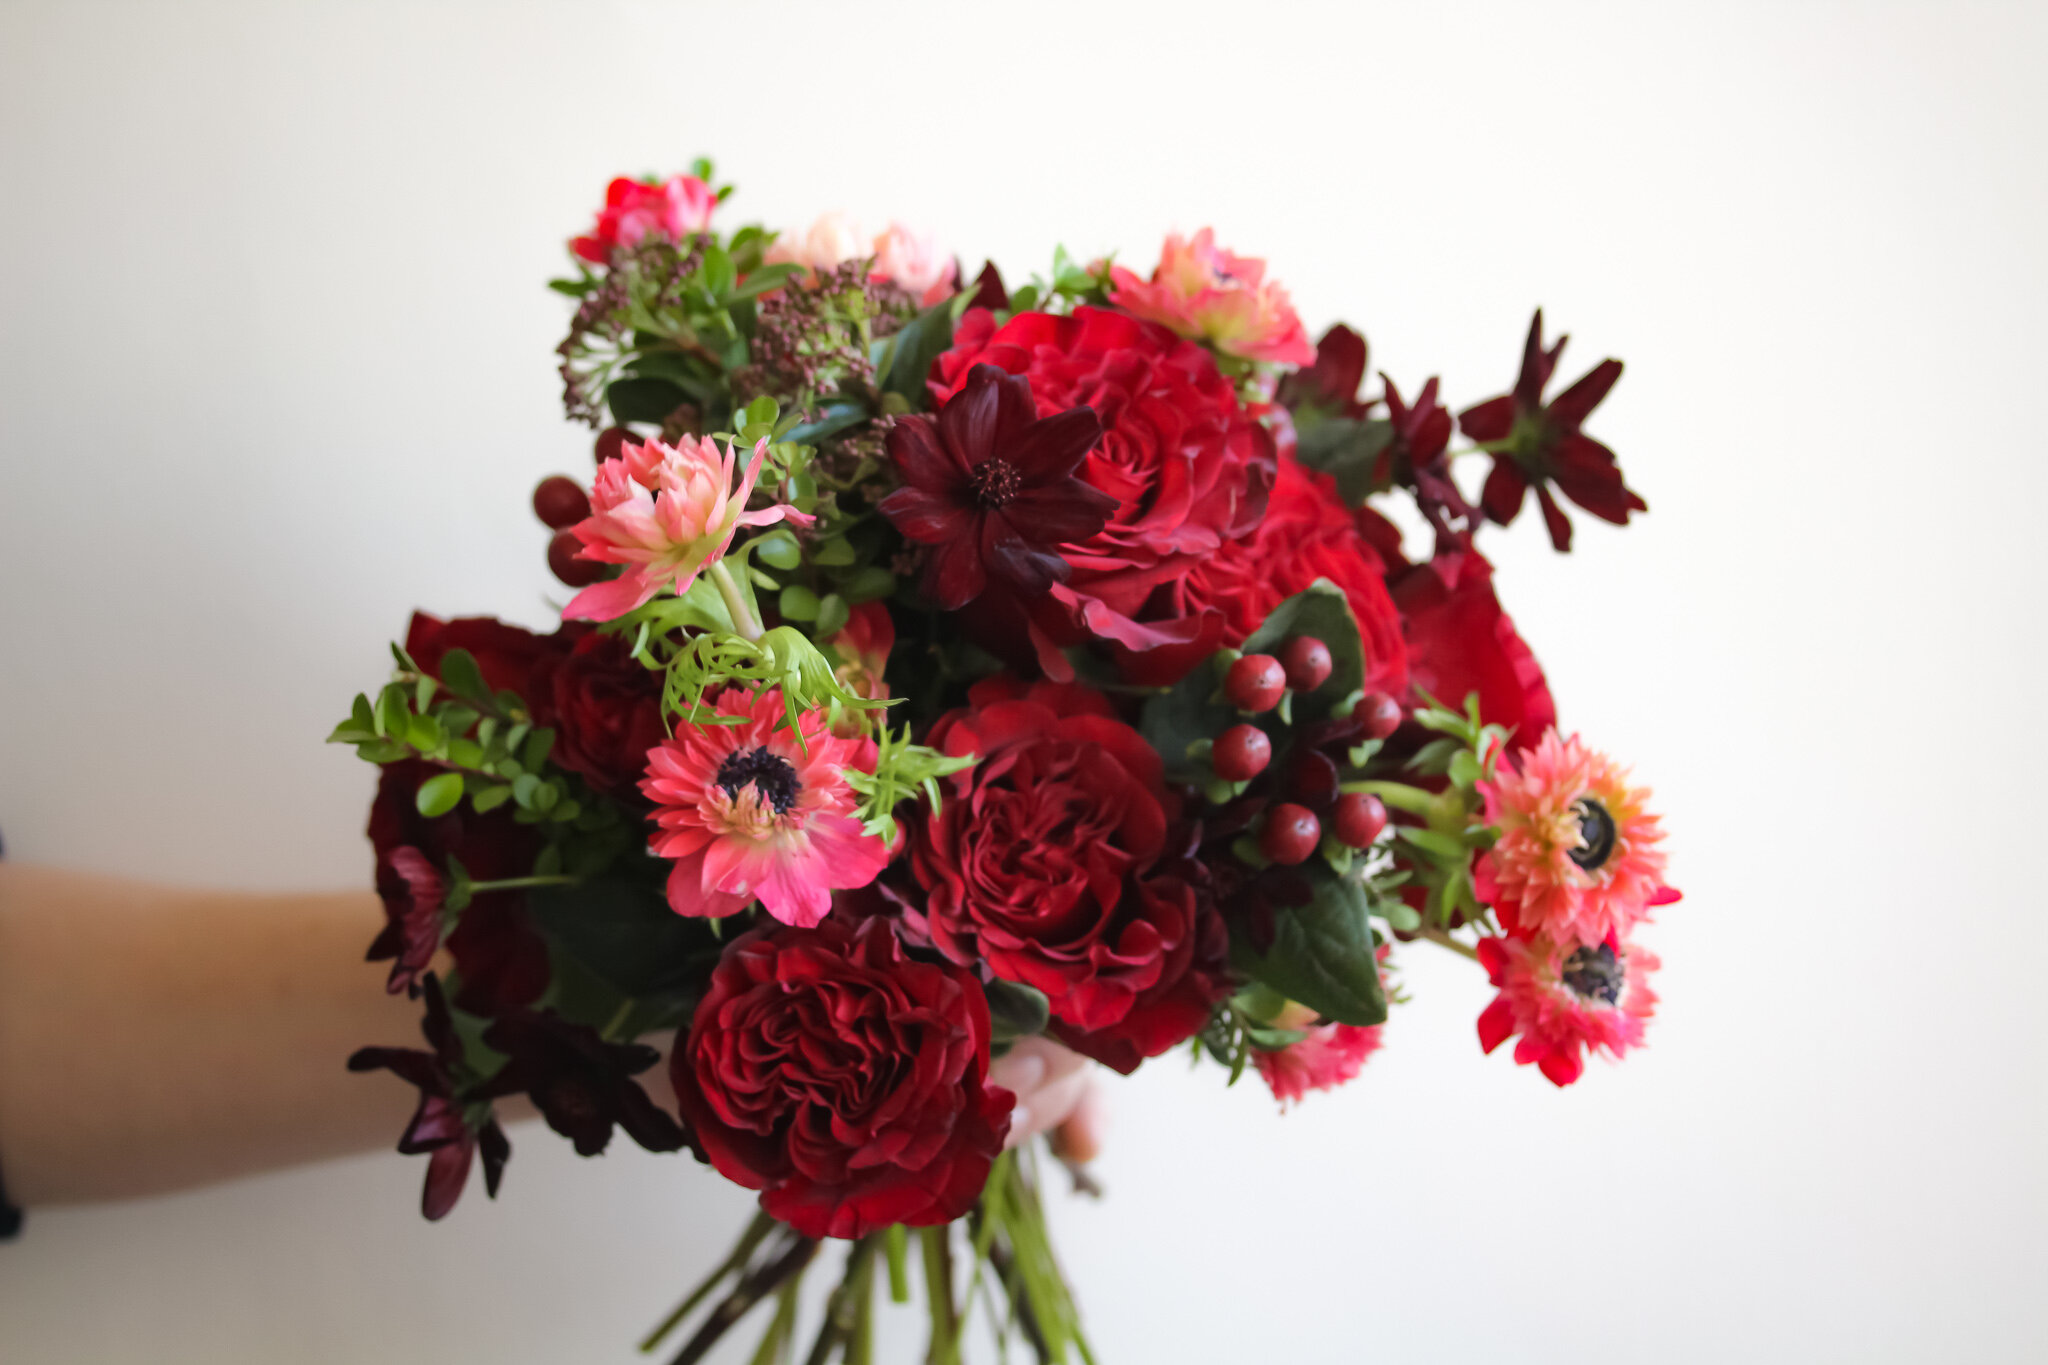 Image by Sarah's Floral Design